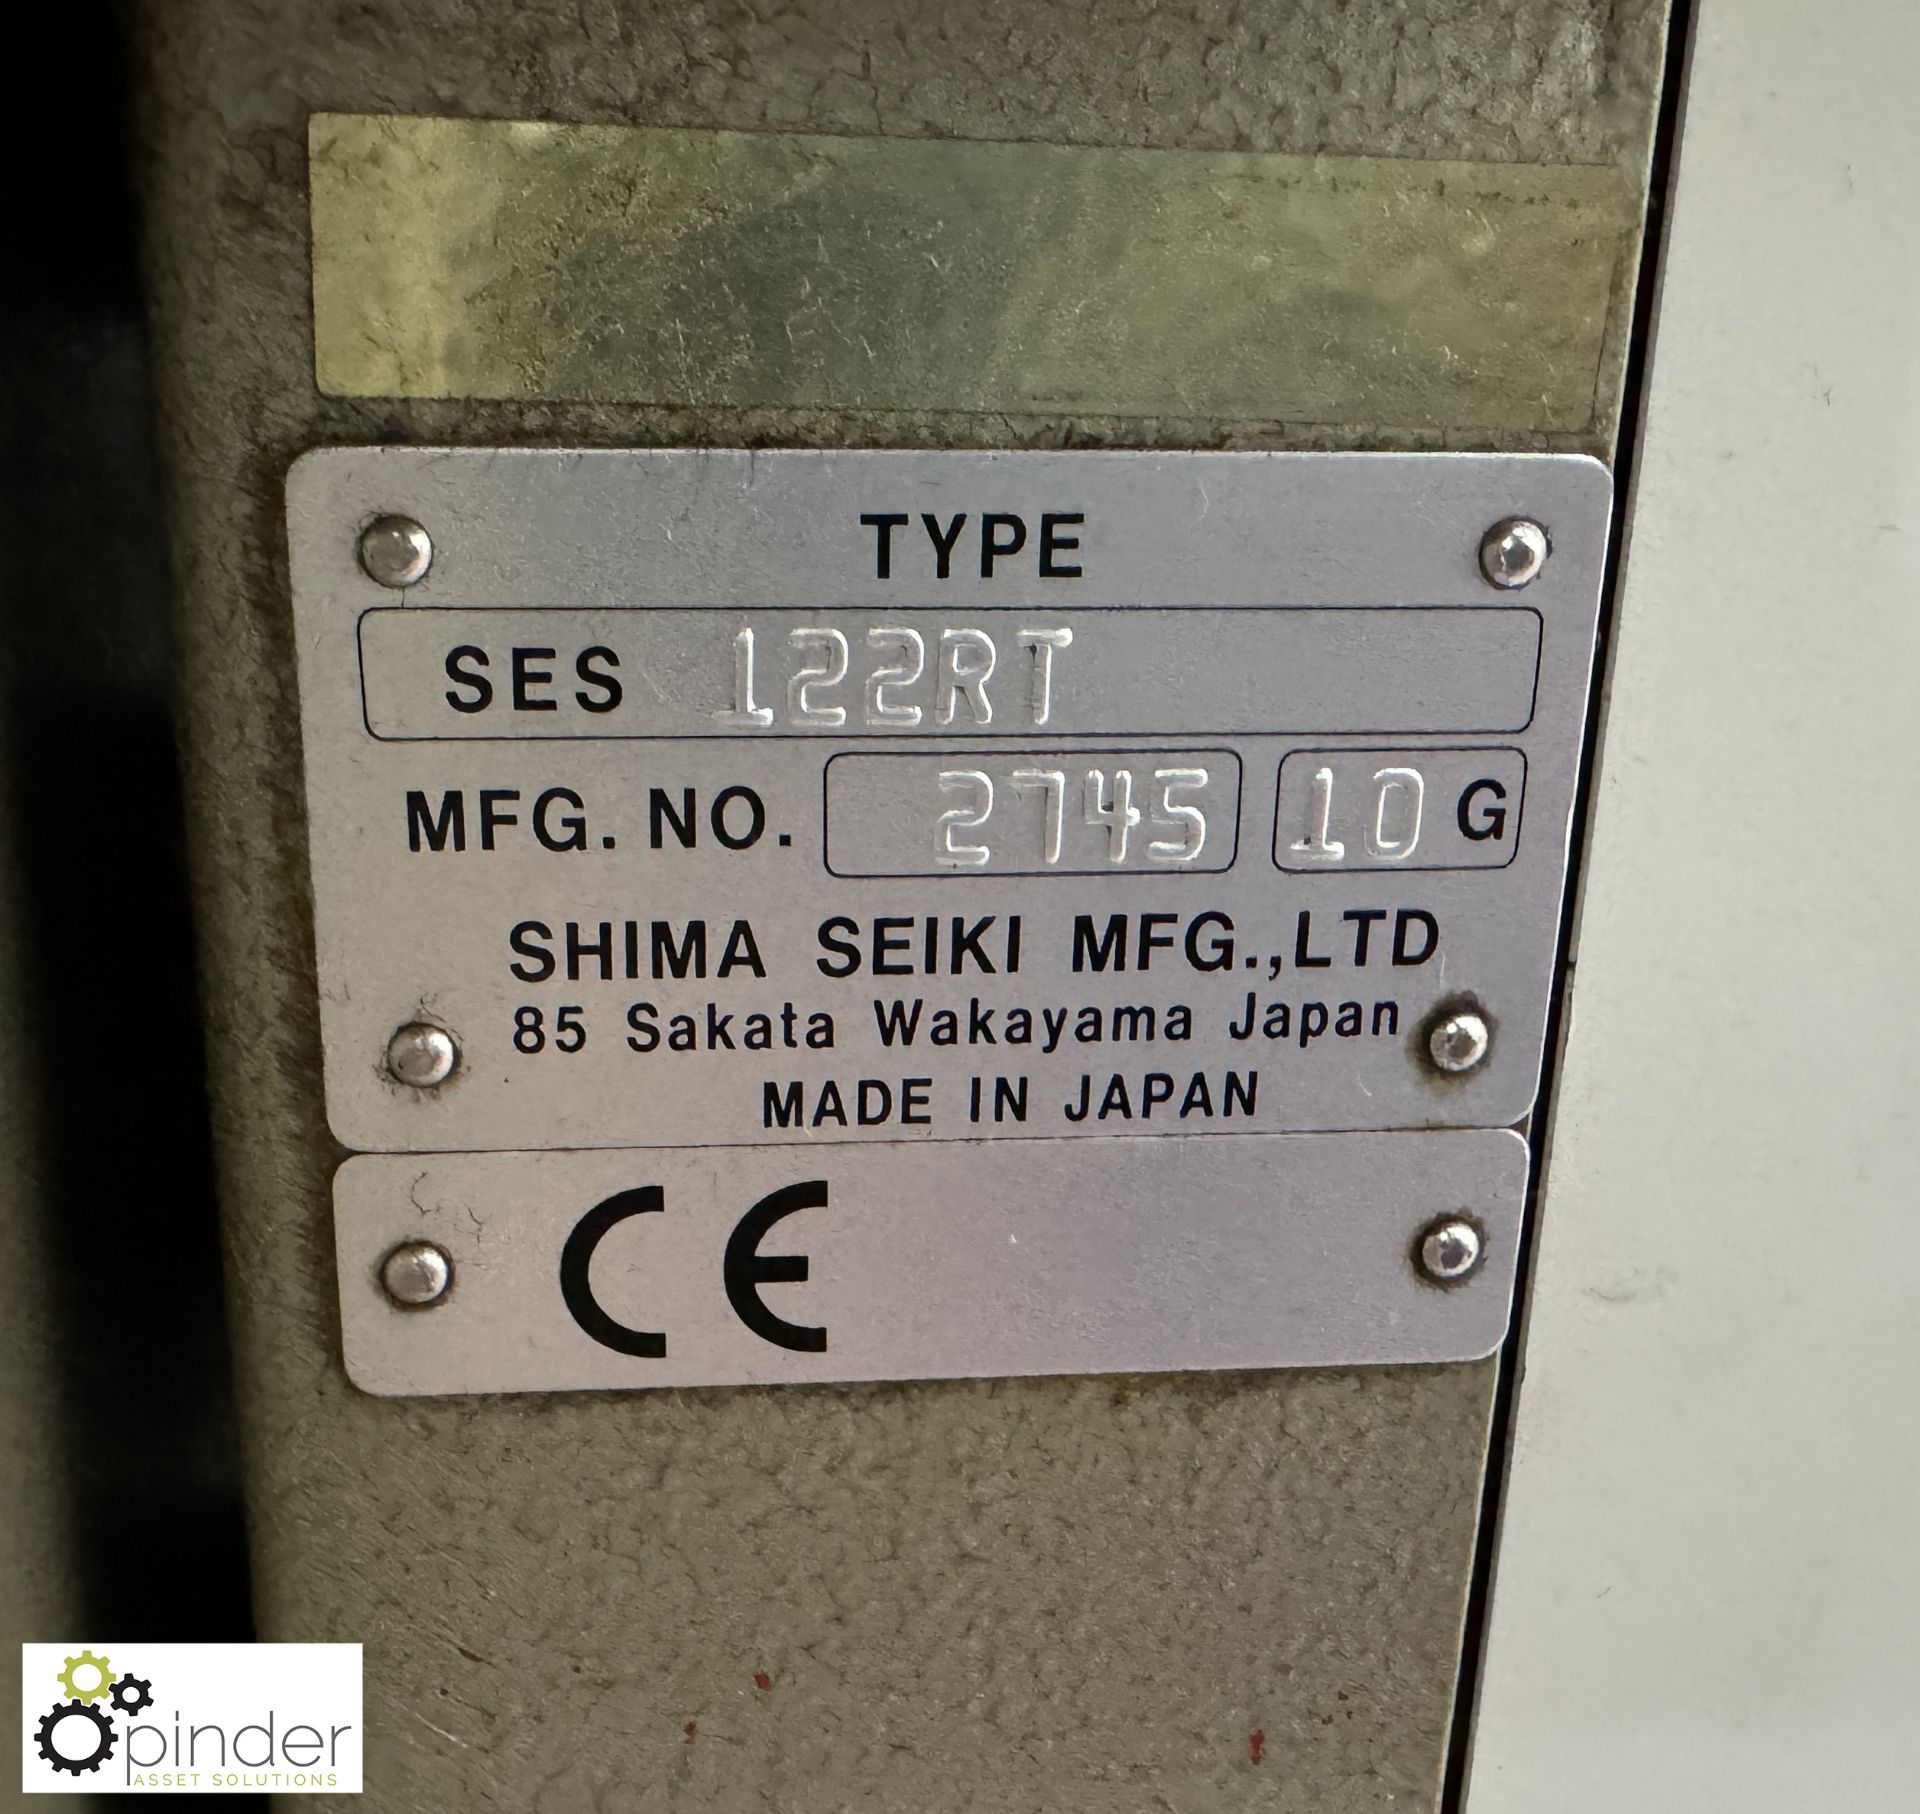 Shima Seiki SES122RT flat bed Knitting Machine, 10 gauge, serial number 2745, with Shimatronic - Image 8 of 10